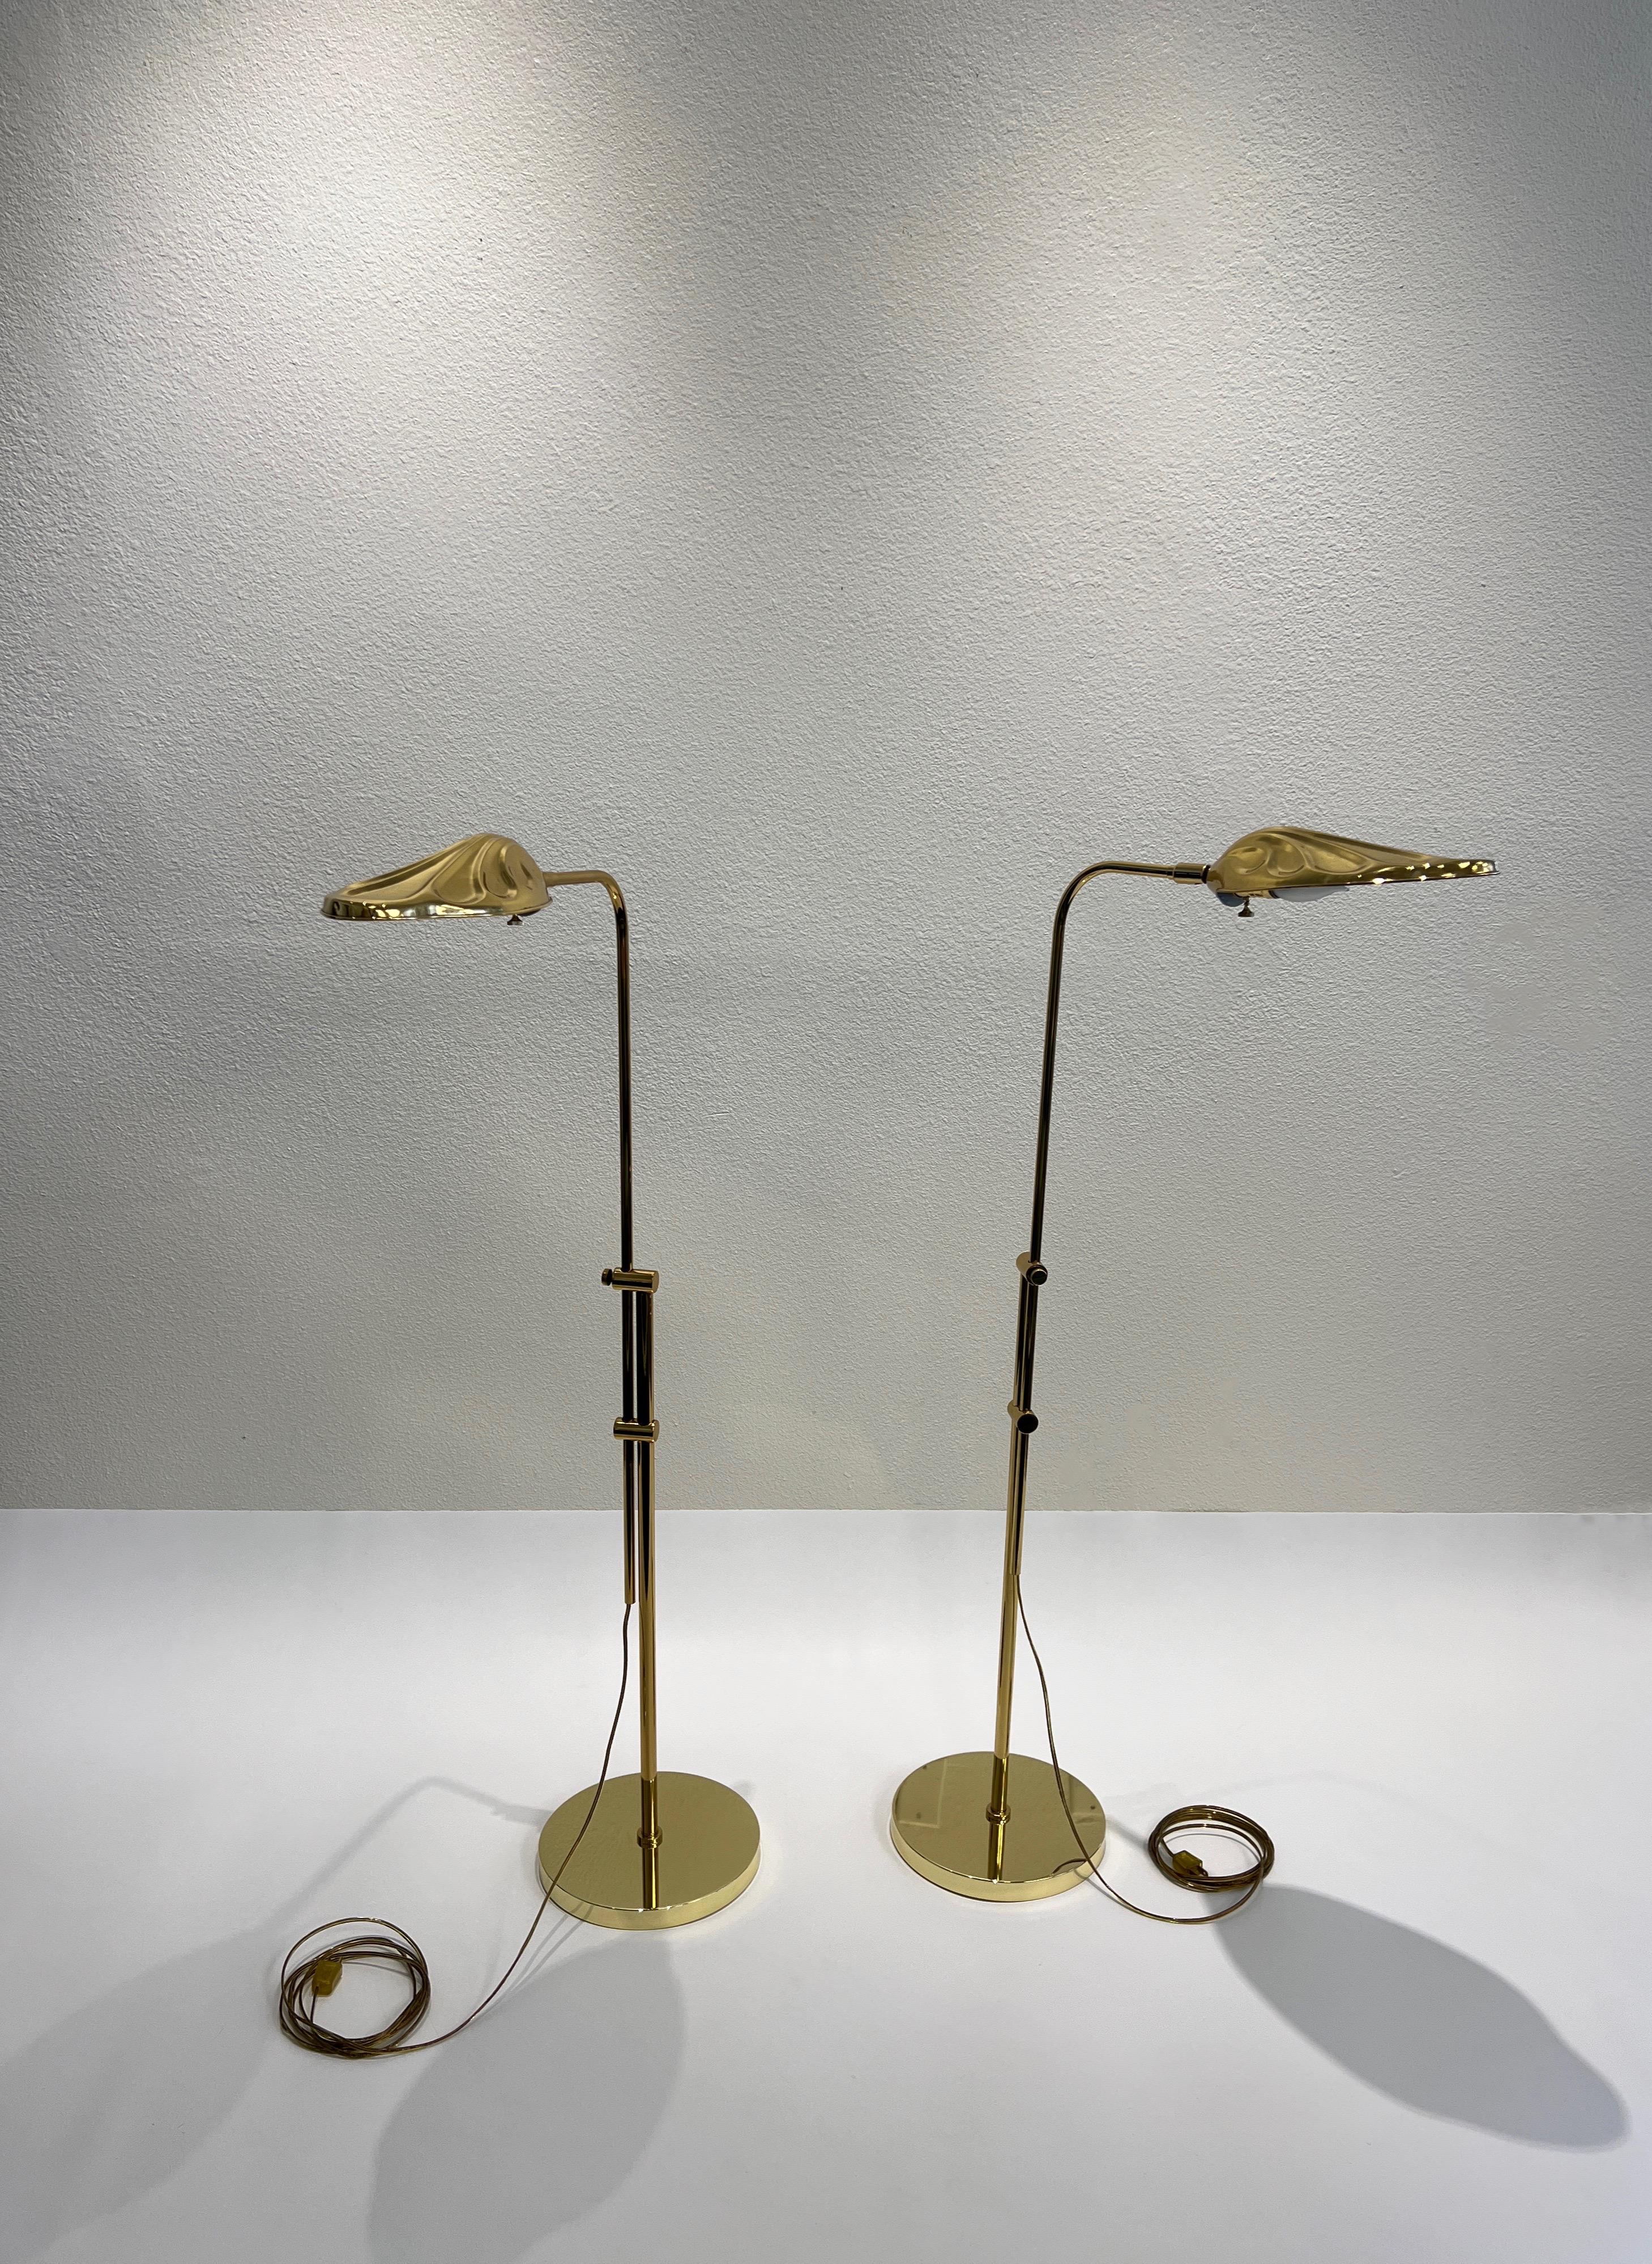 Pair of Brass Leaf Adjustable Floor Lamps by Chapman 1